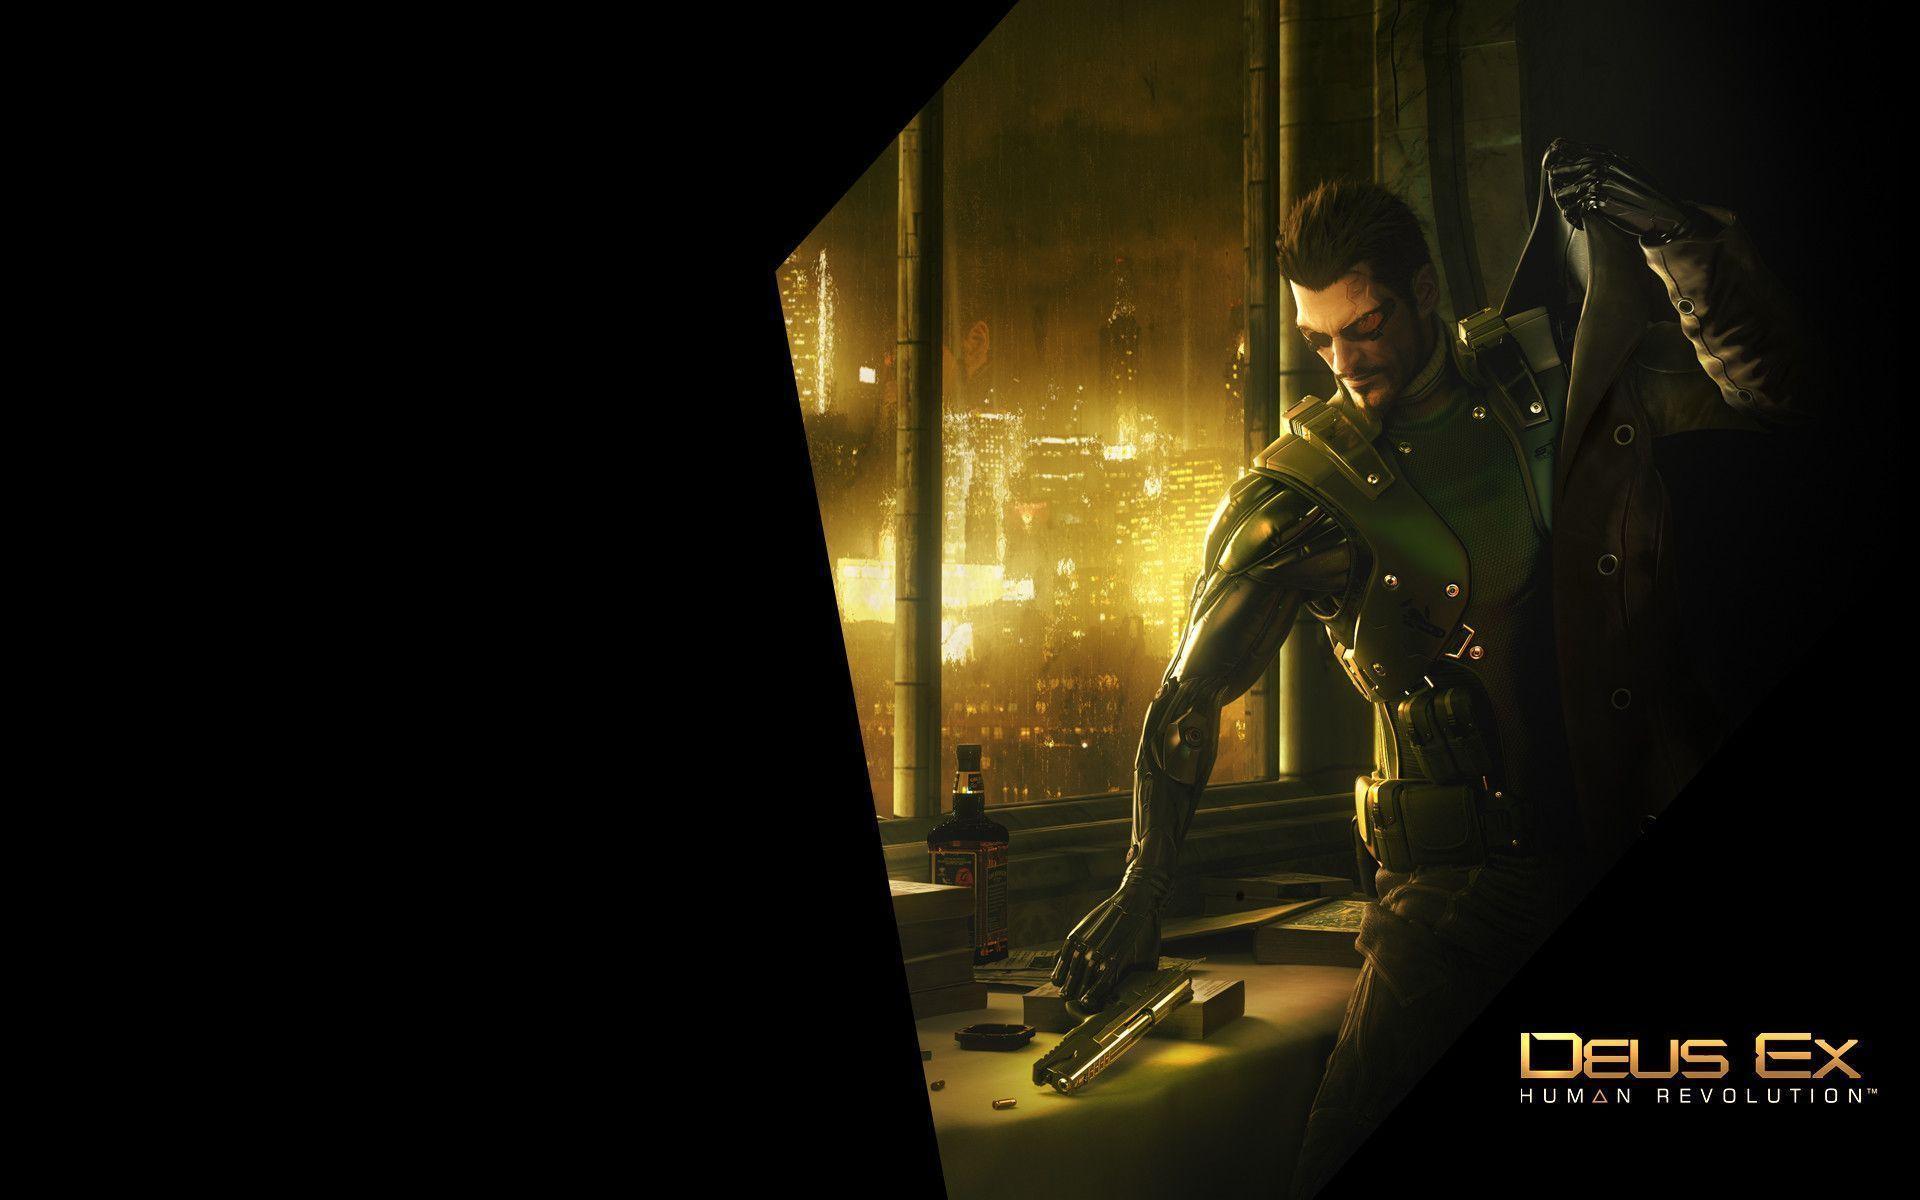 Deus Ex Human Revolution Wallpaper Ready for Action